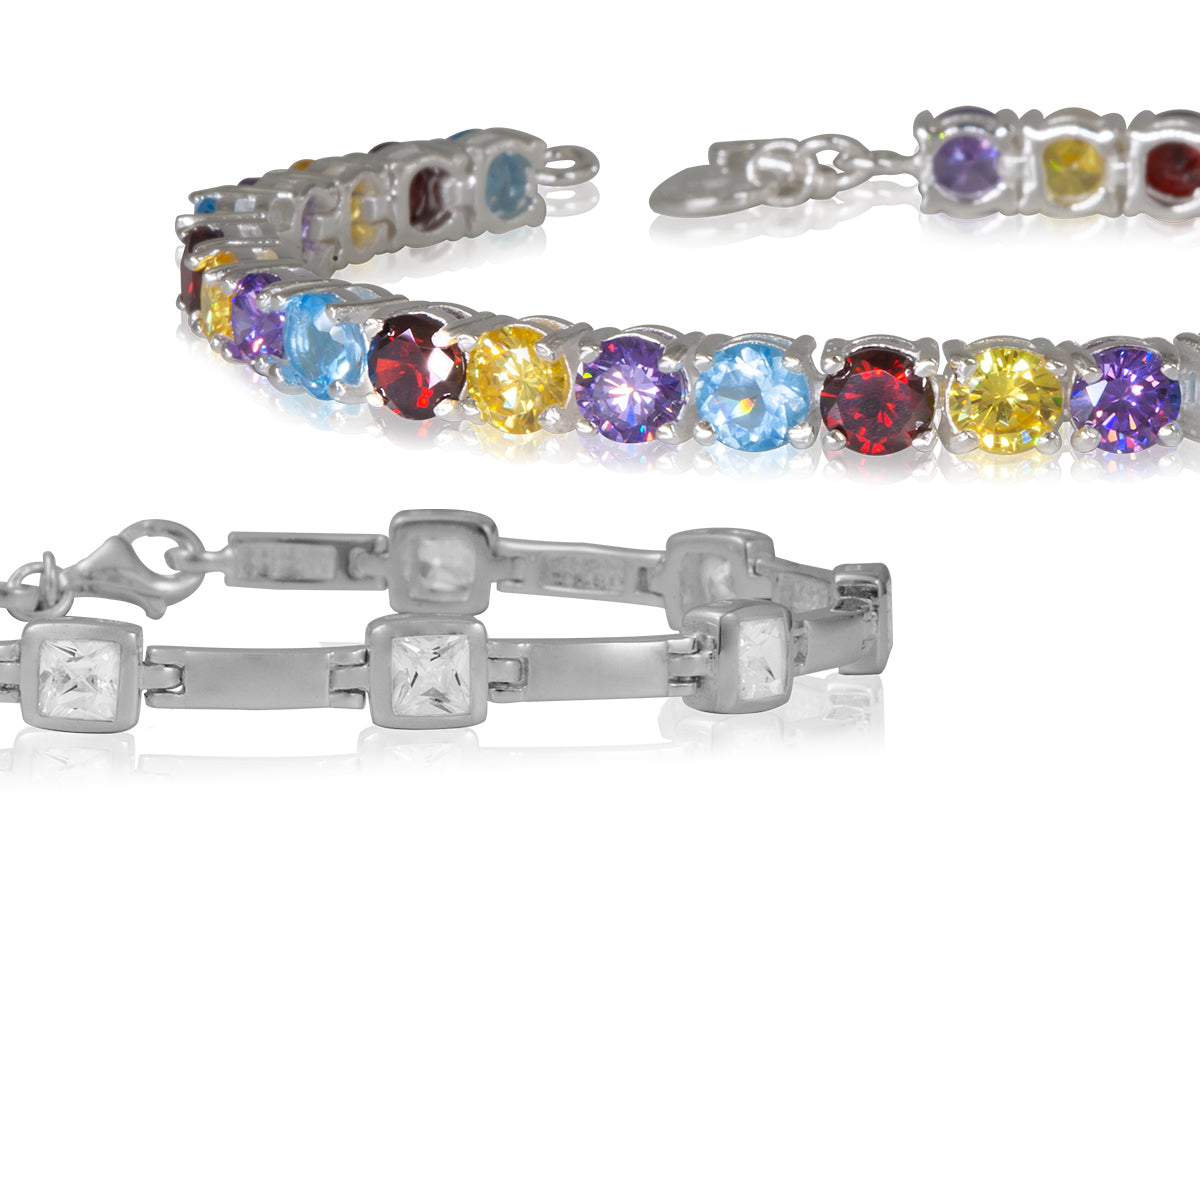 Colourful gemstone tennis bracelet